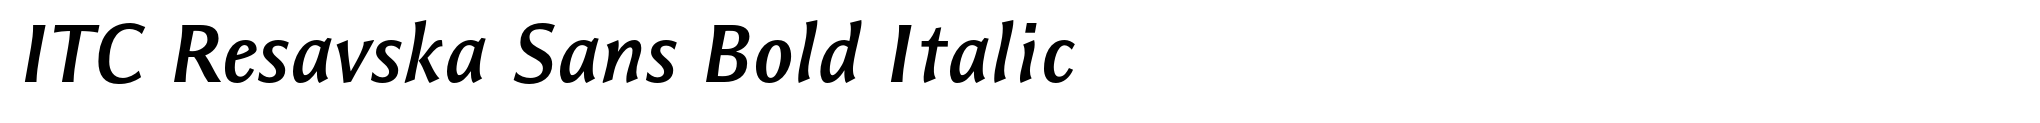 ITC Resavska Sans Bold Italic image